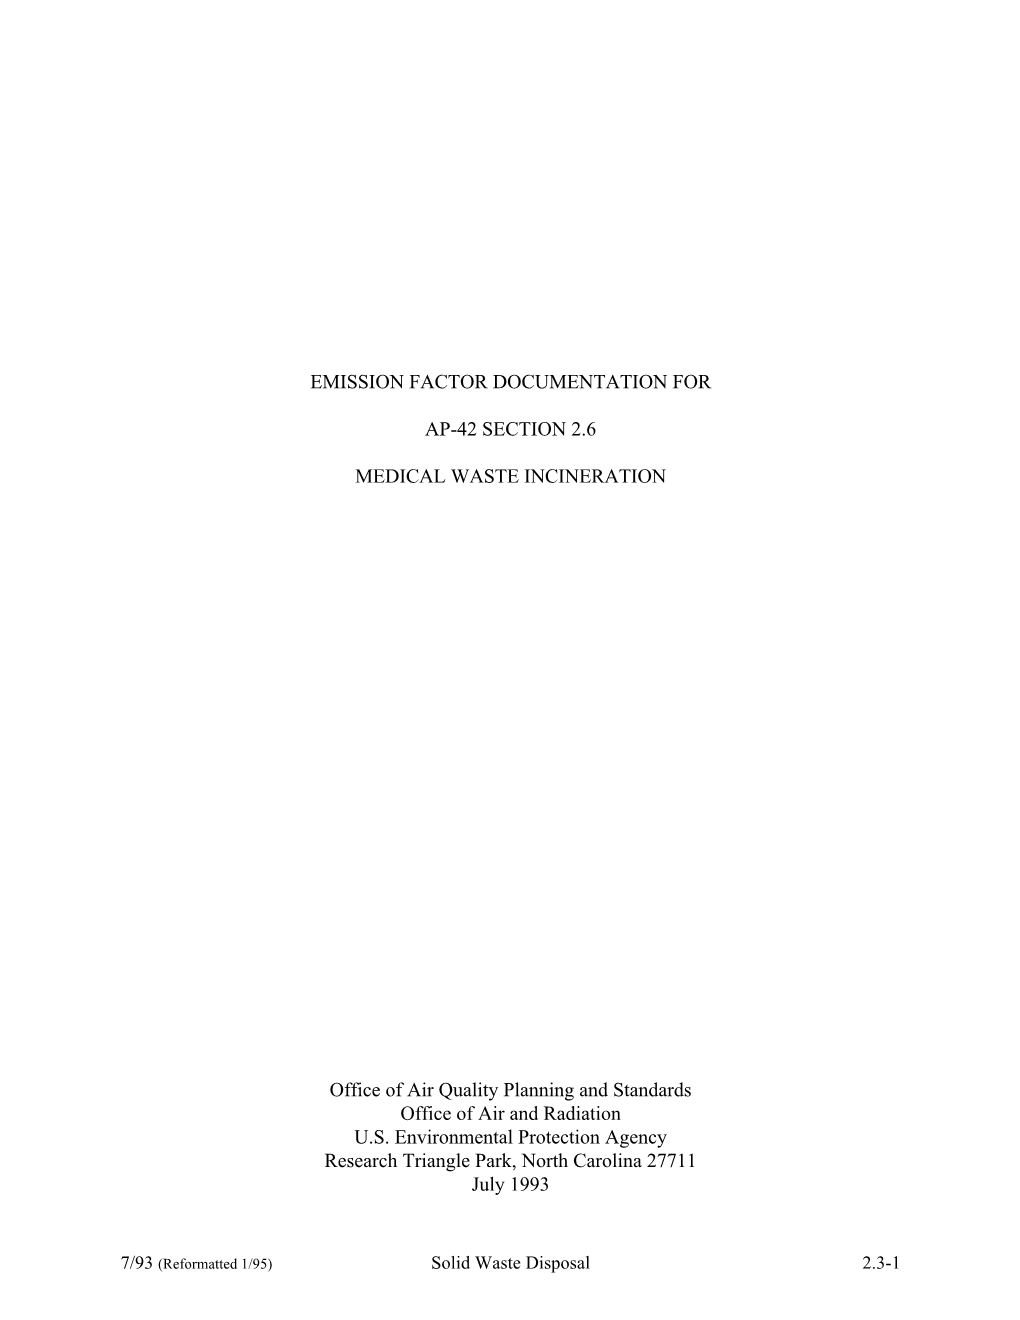 AP-42 Background Document, Section 2.3 Medical Waste Incineration